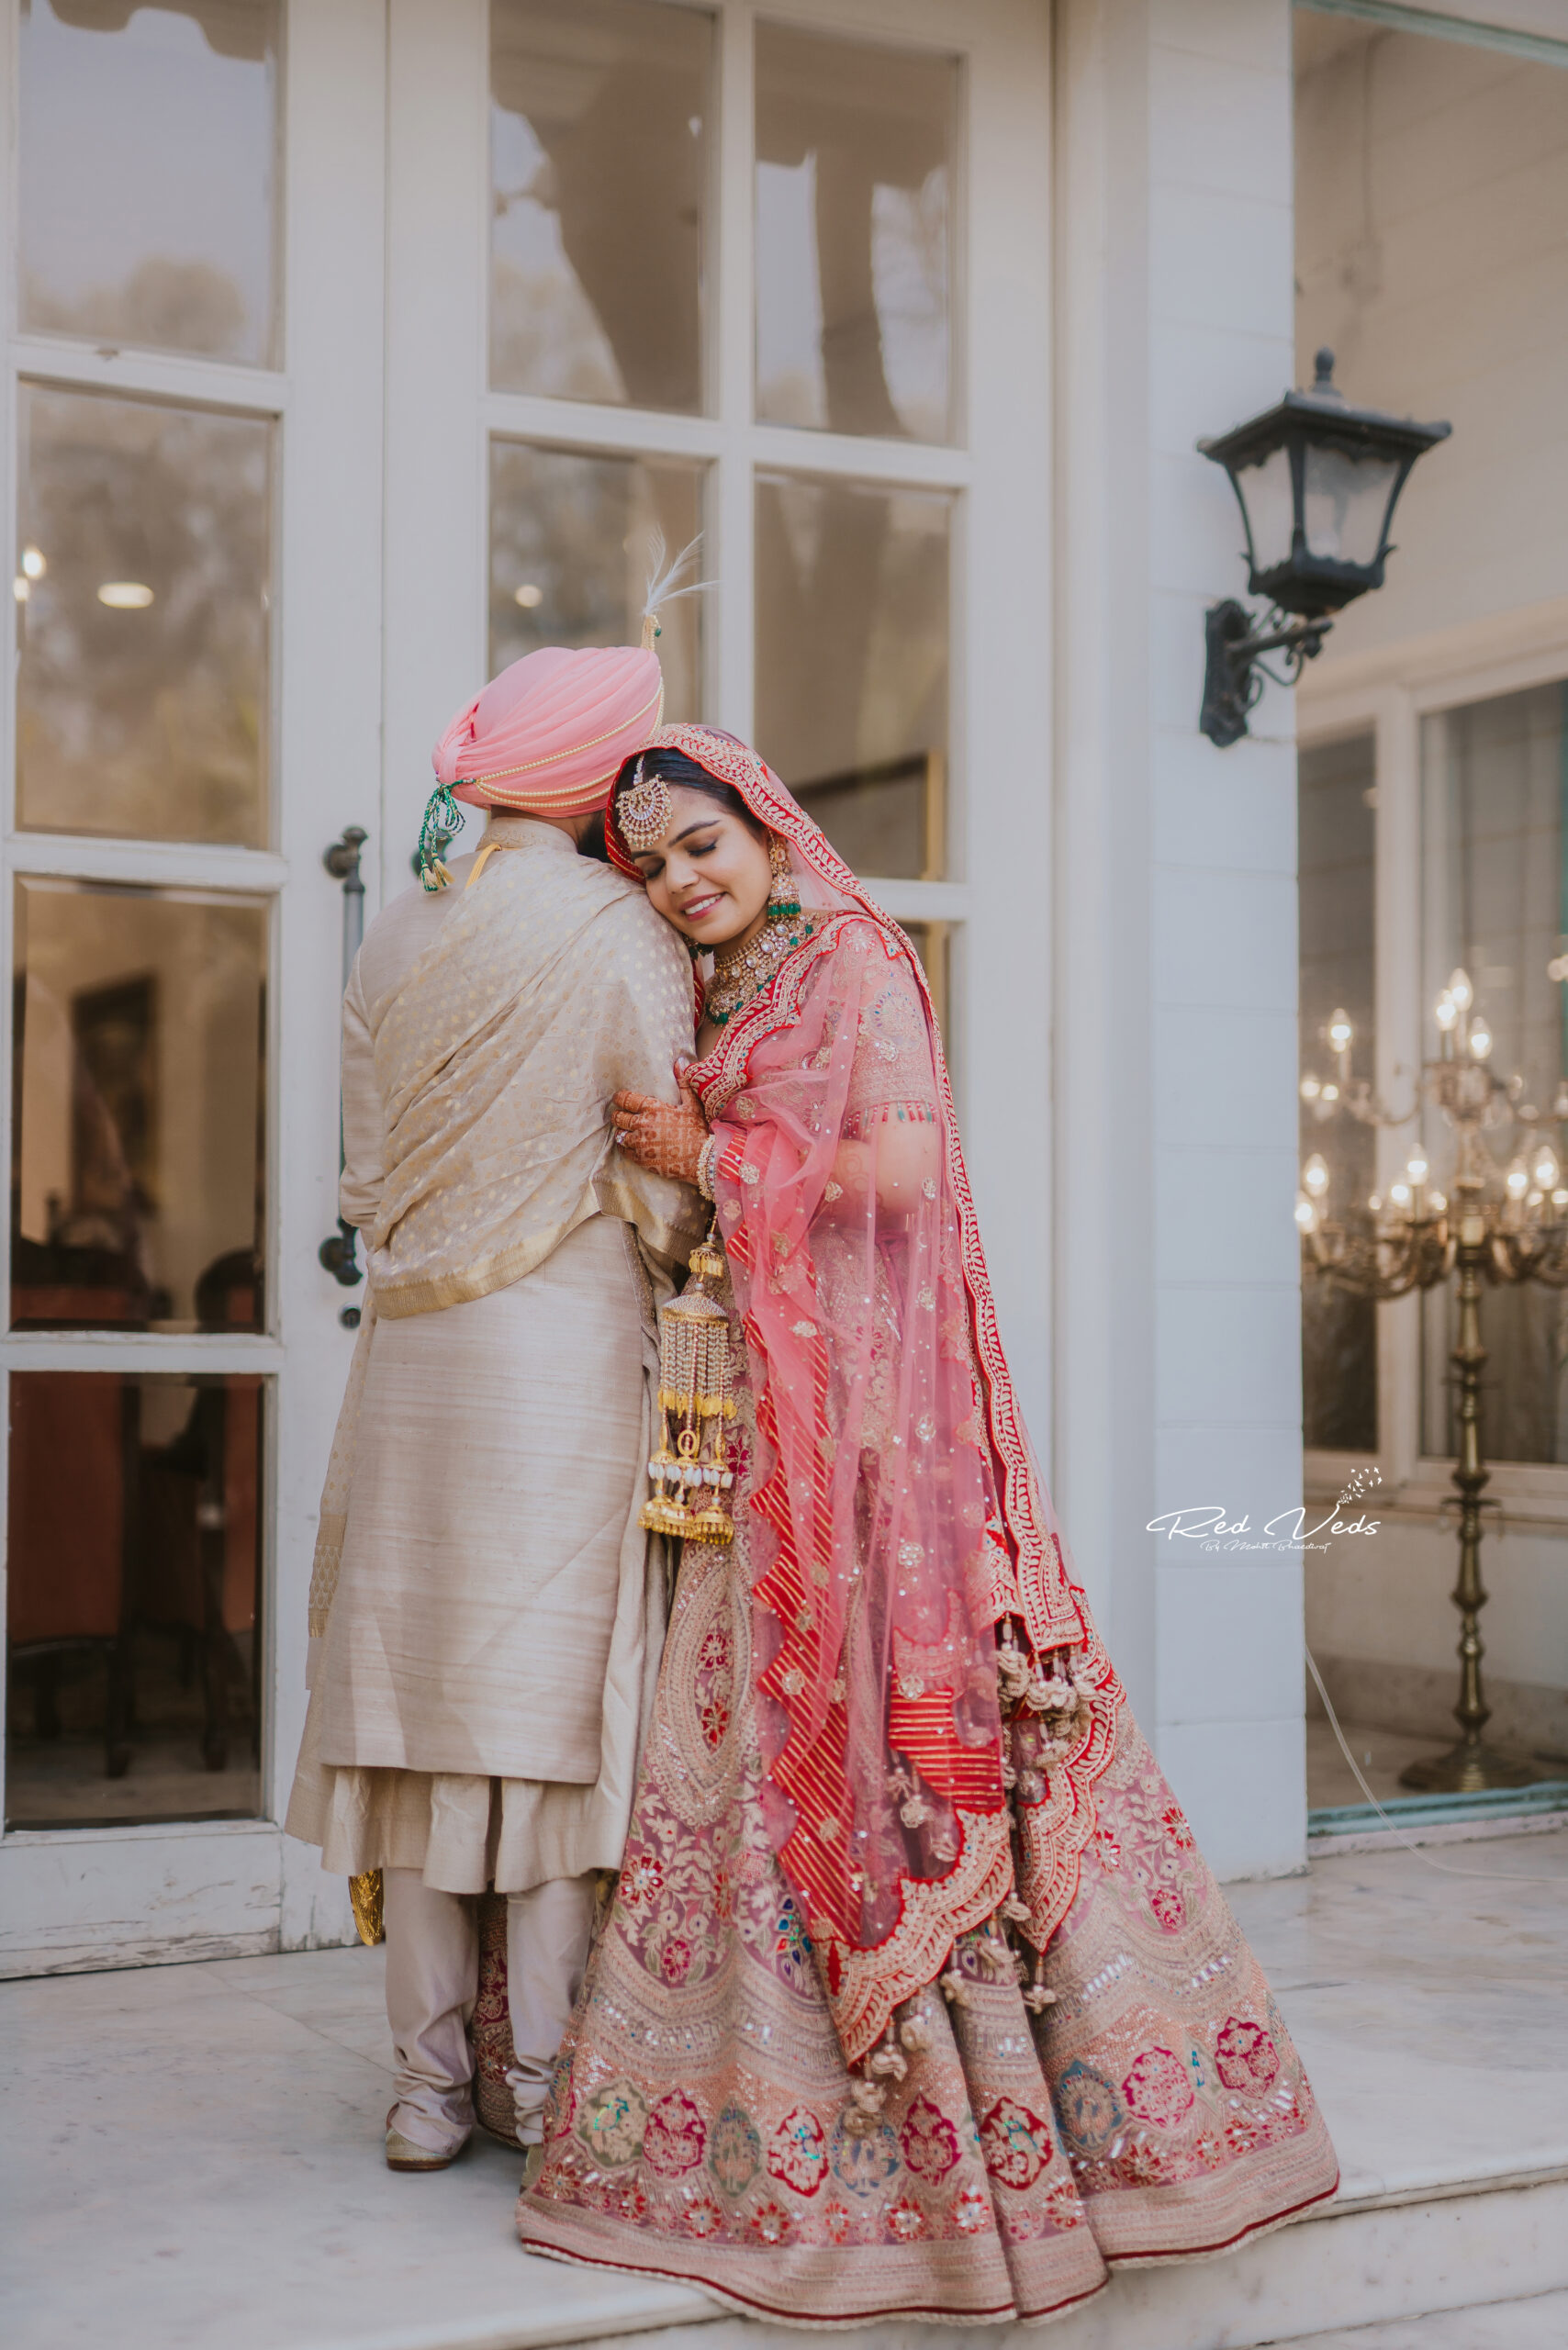 Pin by Vijay Maurya on Vijay Kumar Maurya | Bridal photography poses,  Indian wedding photography couples, Indian bride photography poses